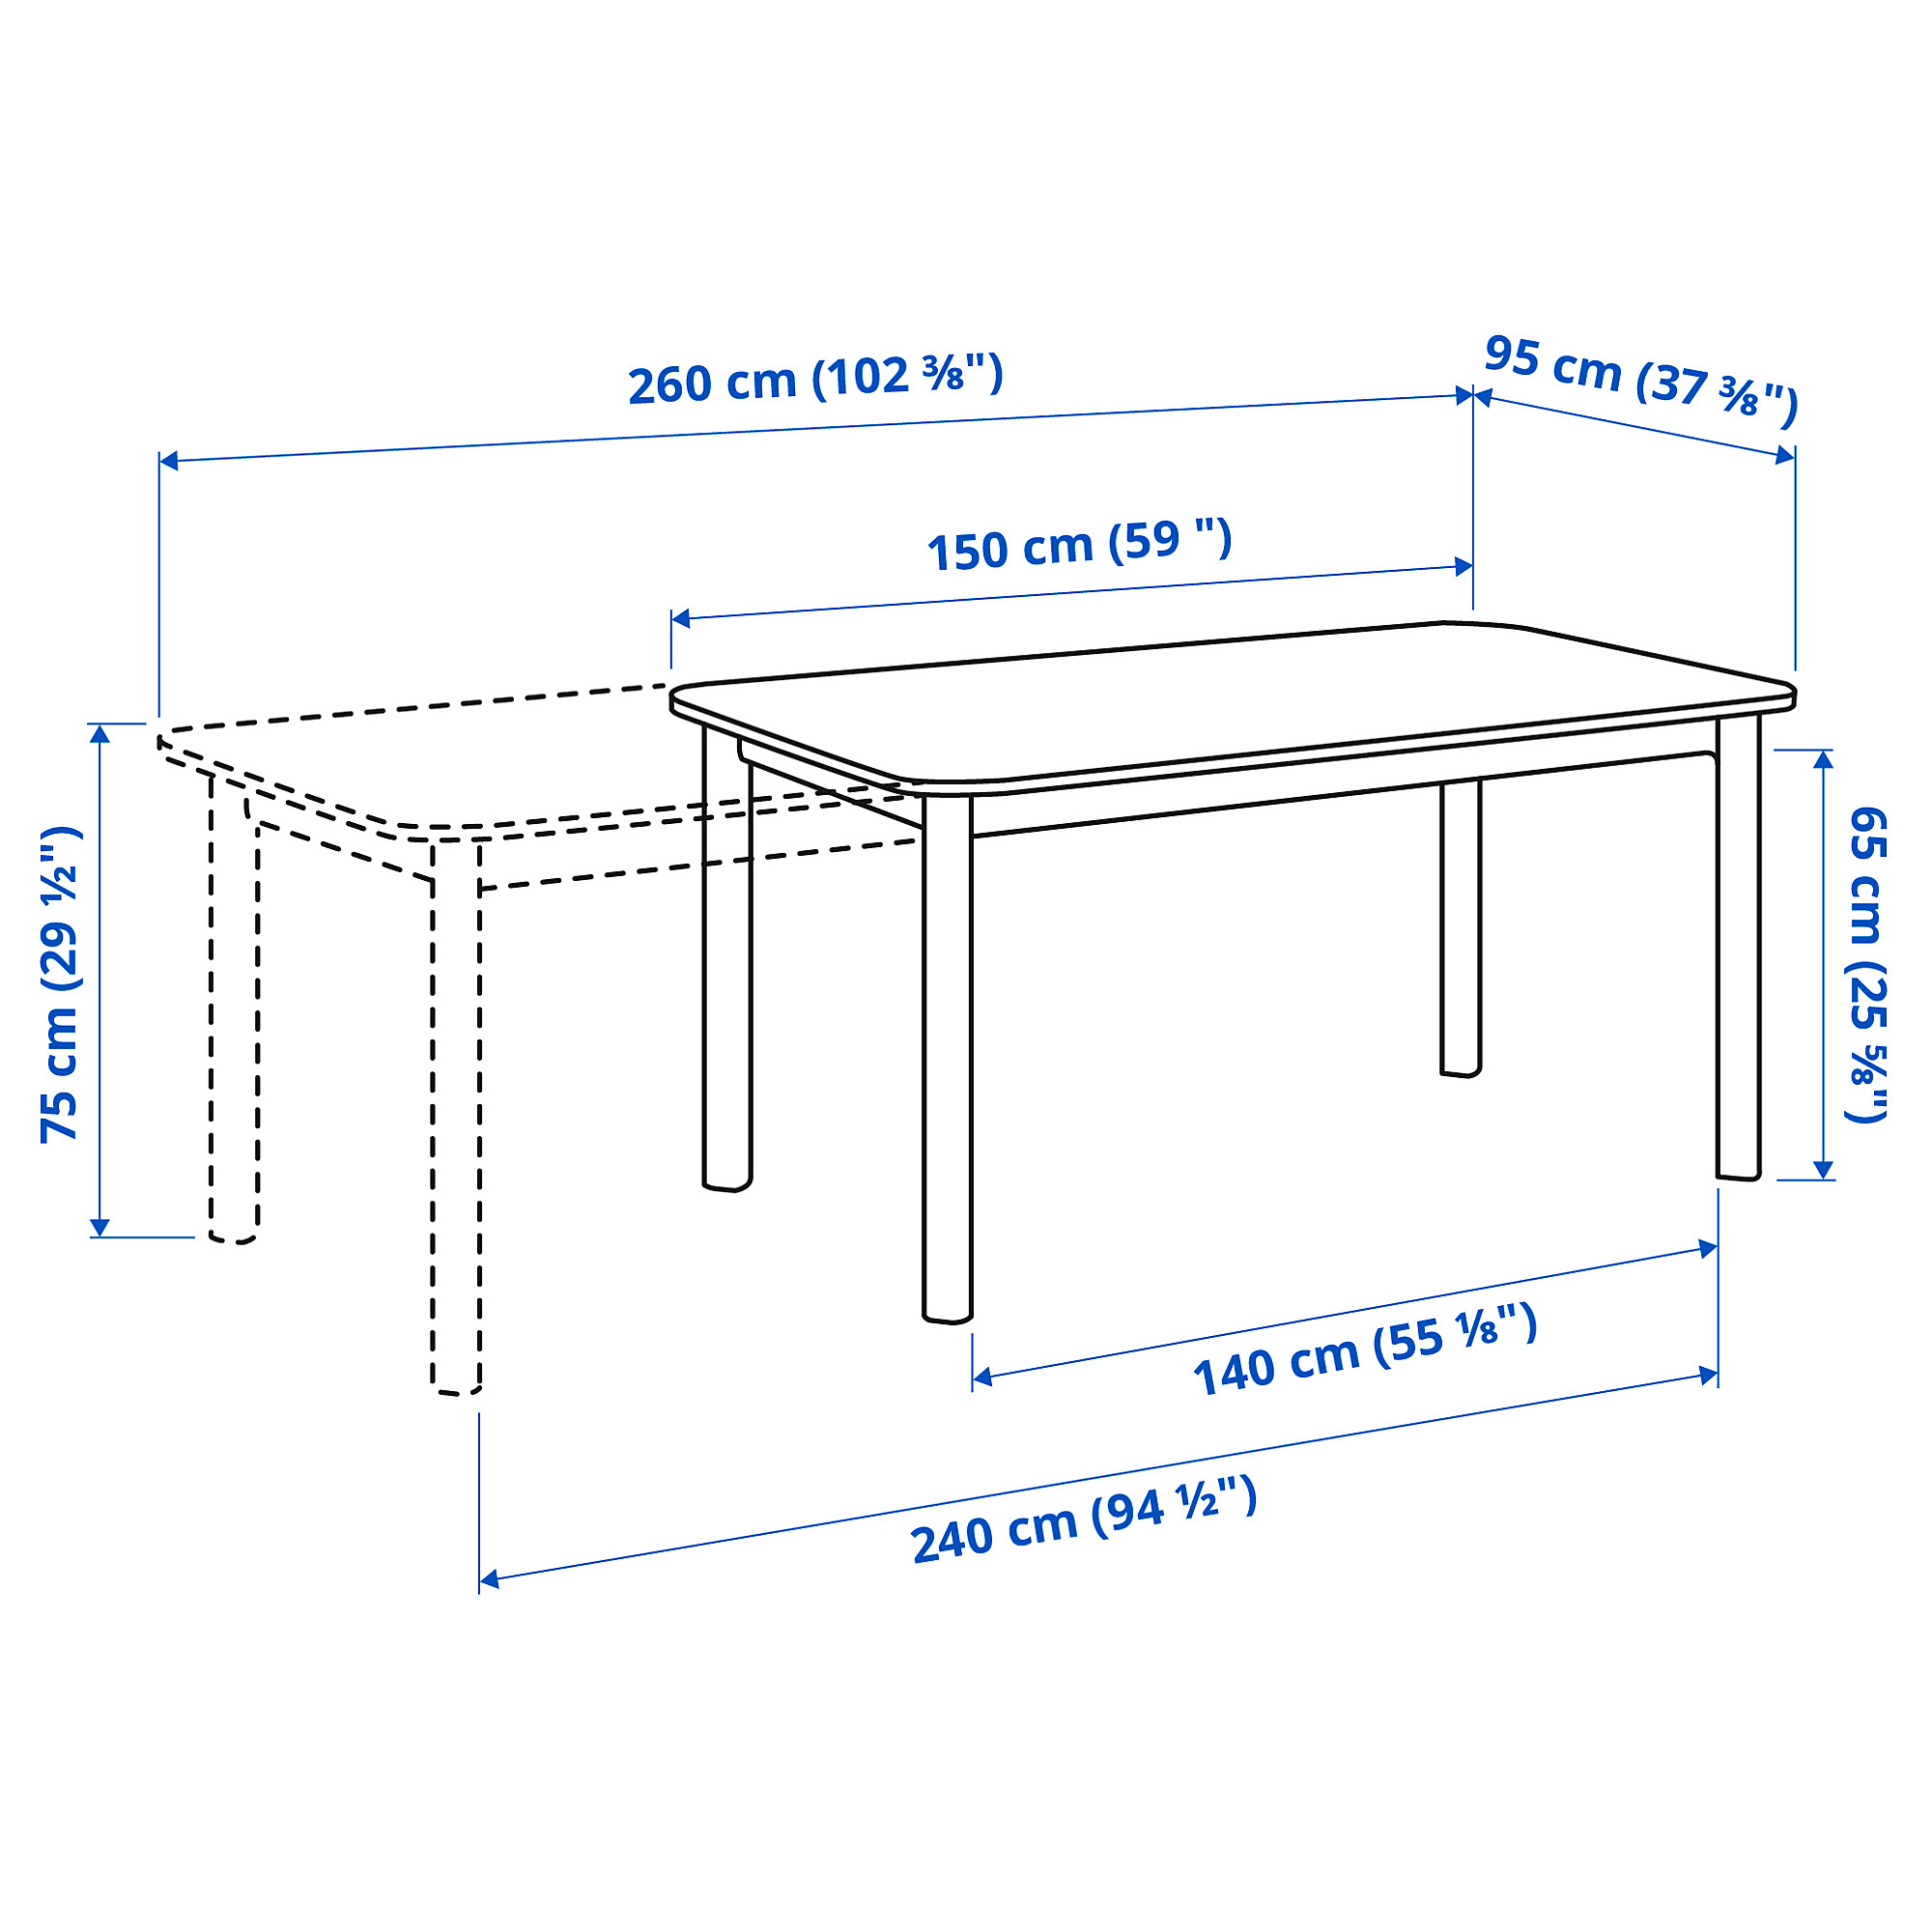 STRANDTORP/UDMUND 餐桌附6張餐椅